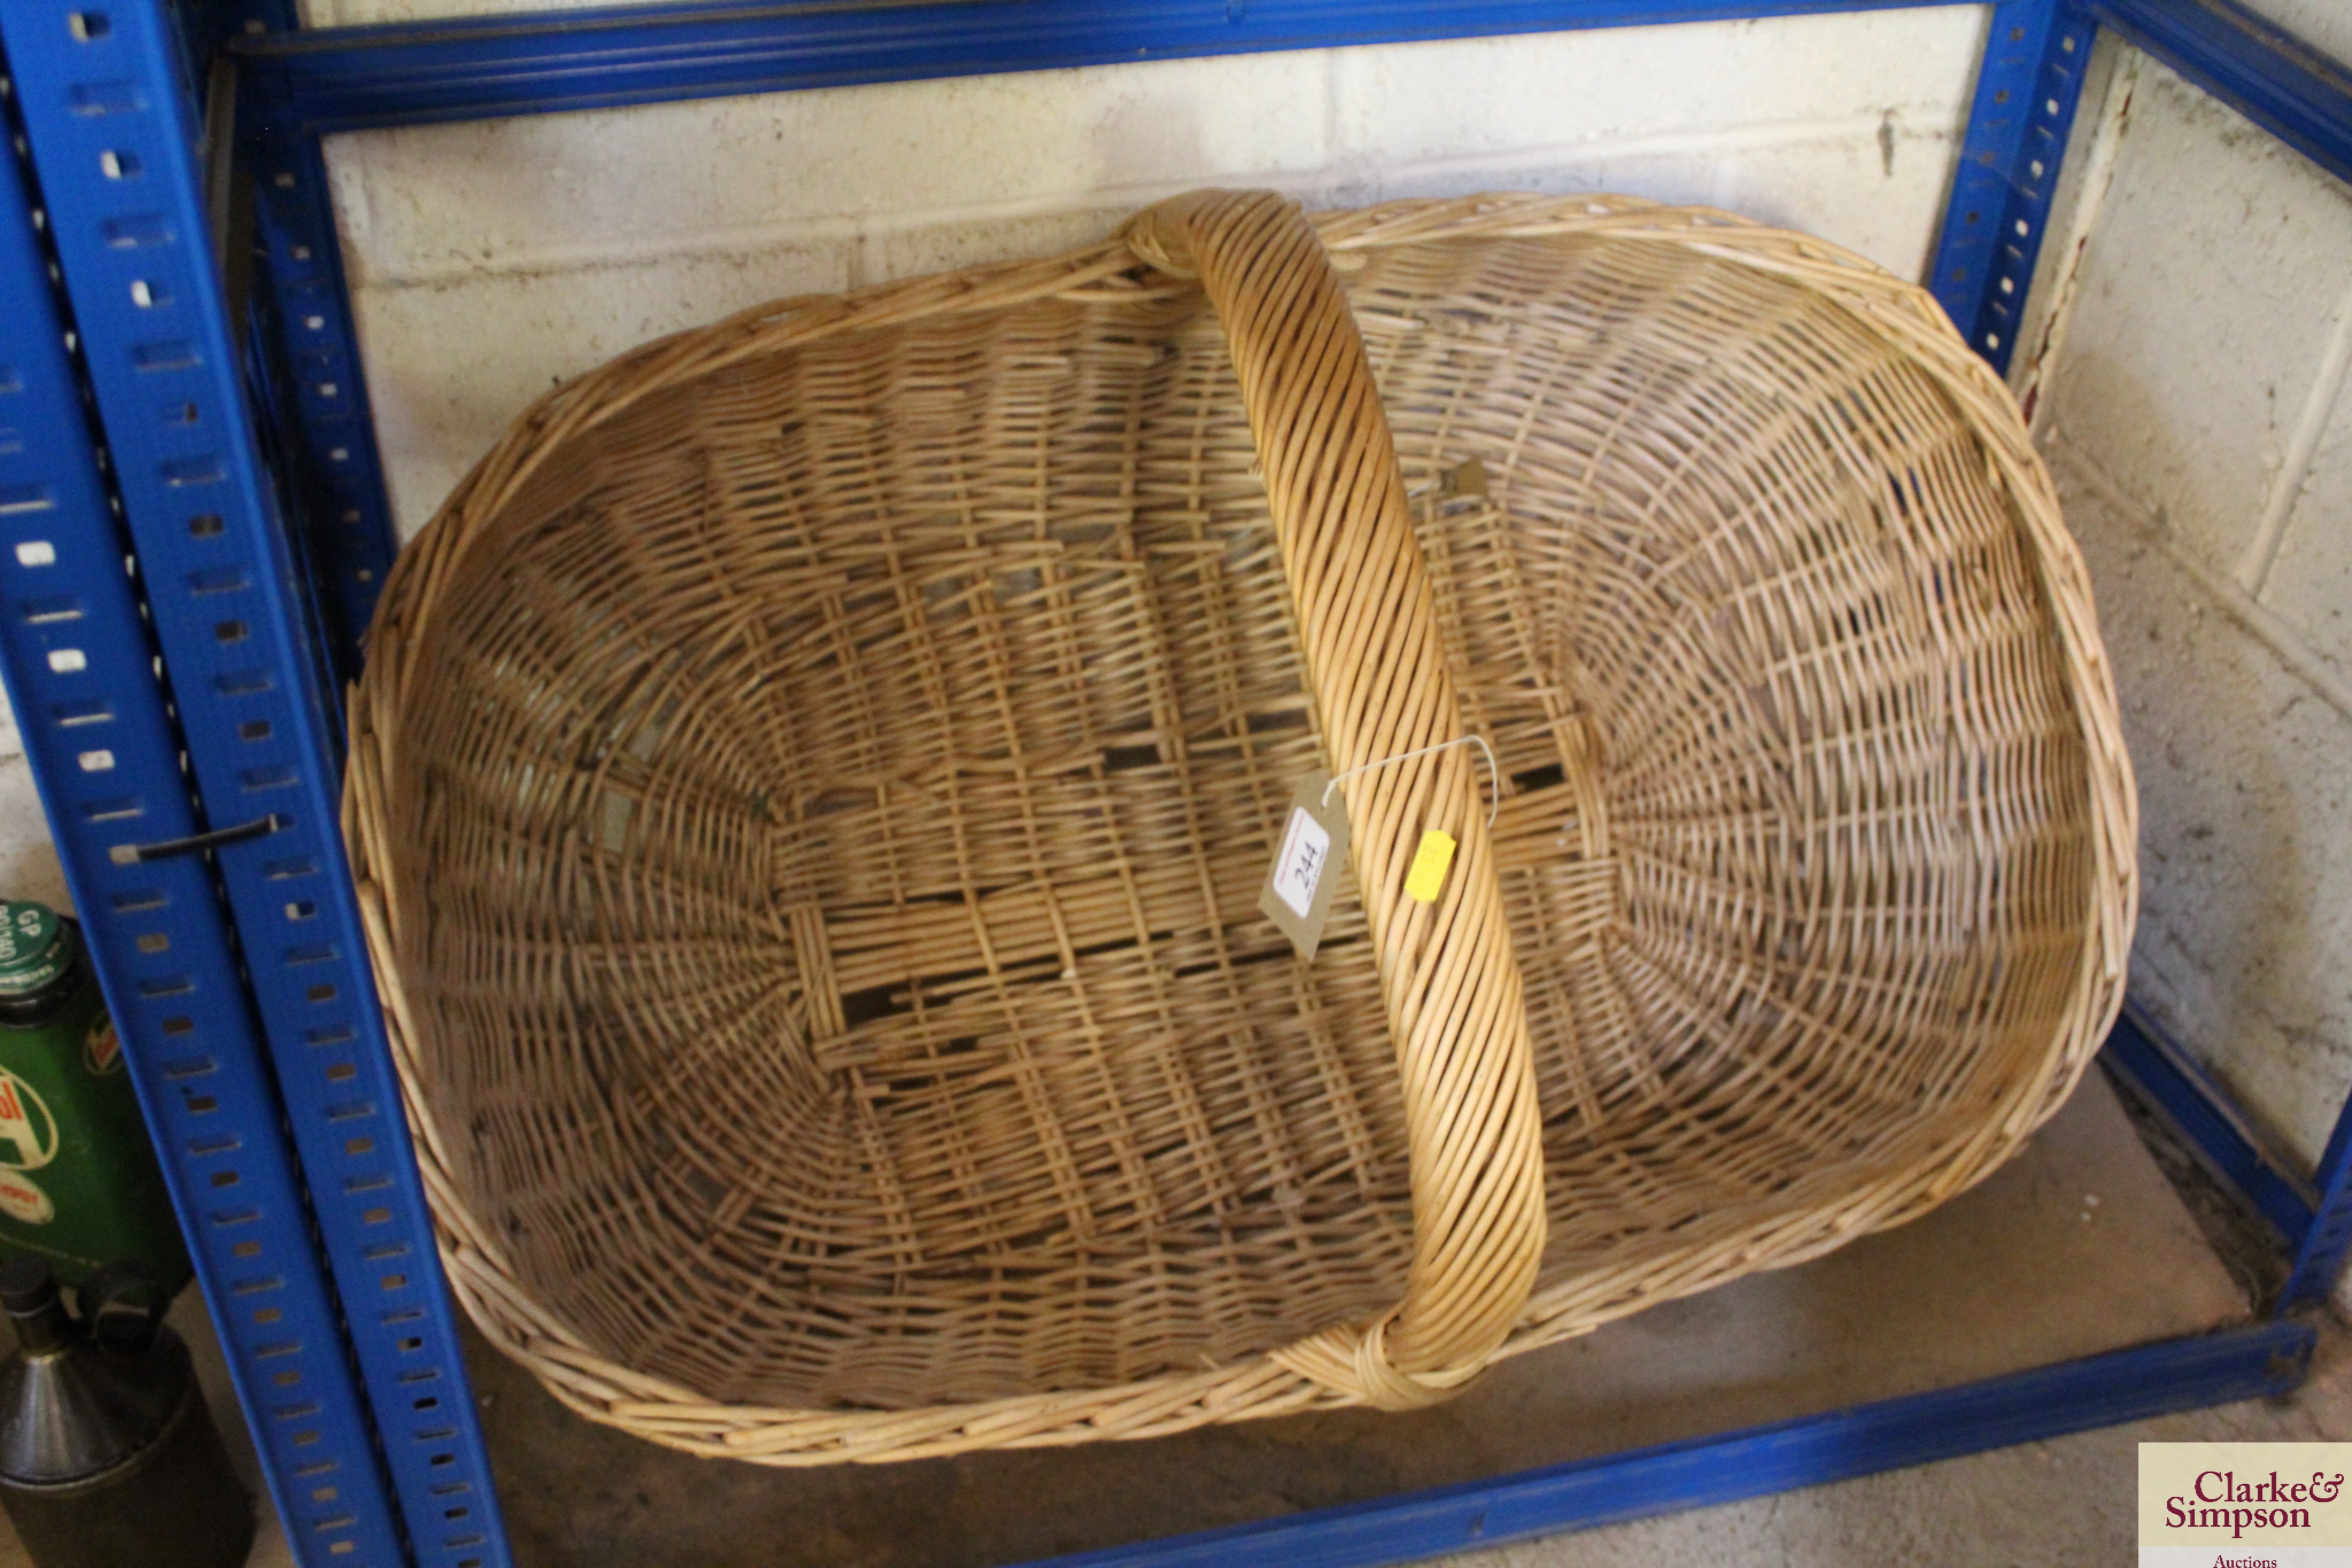 A large wicker basket, approx. 32" x 20"